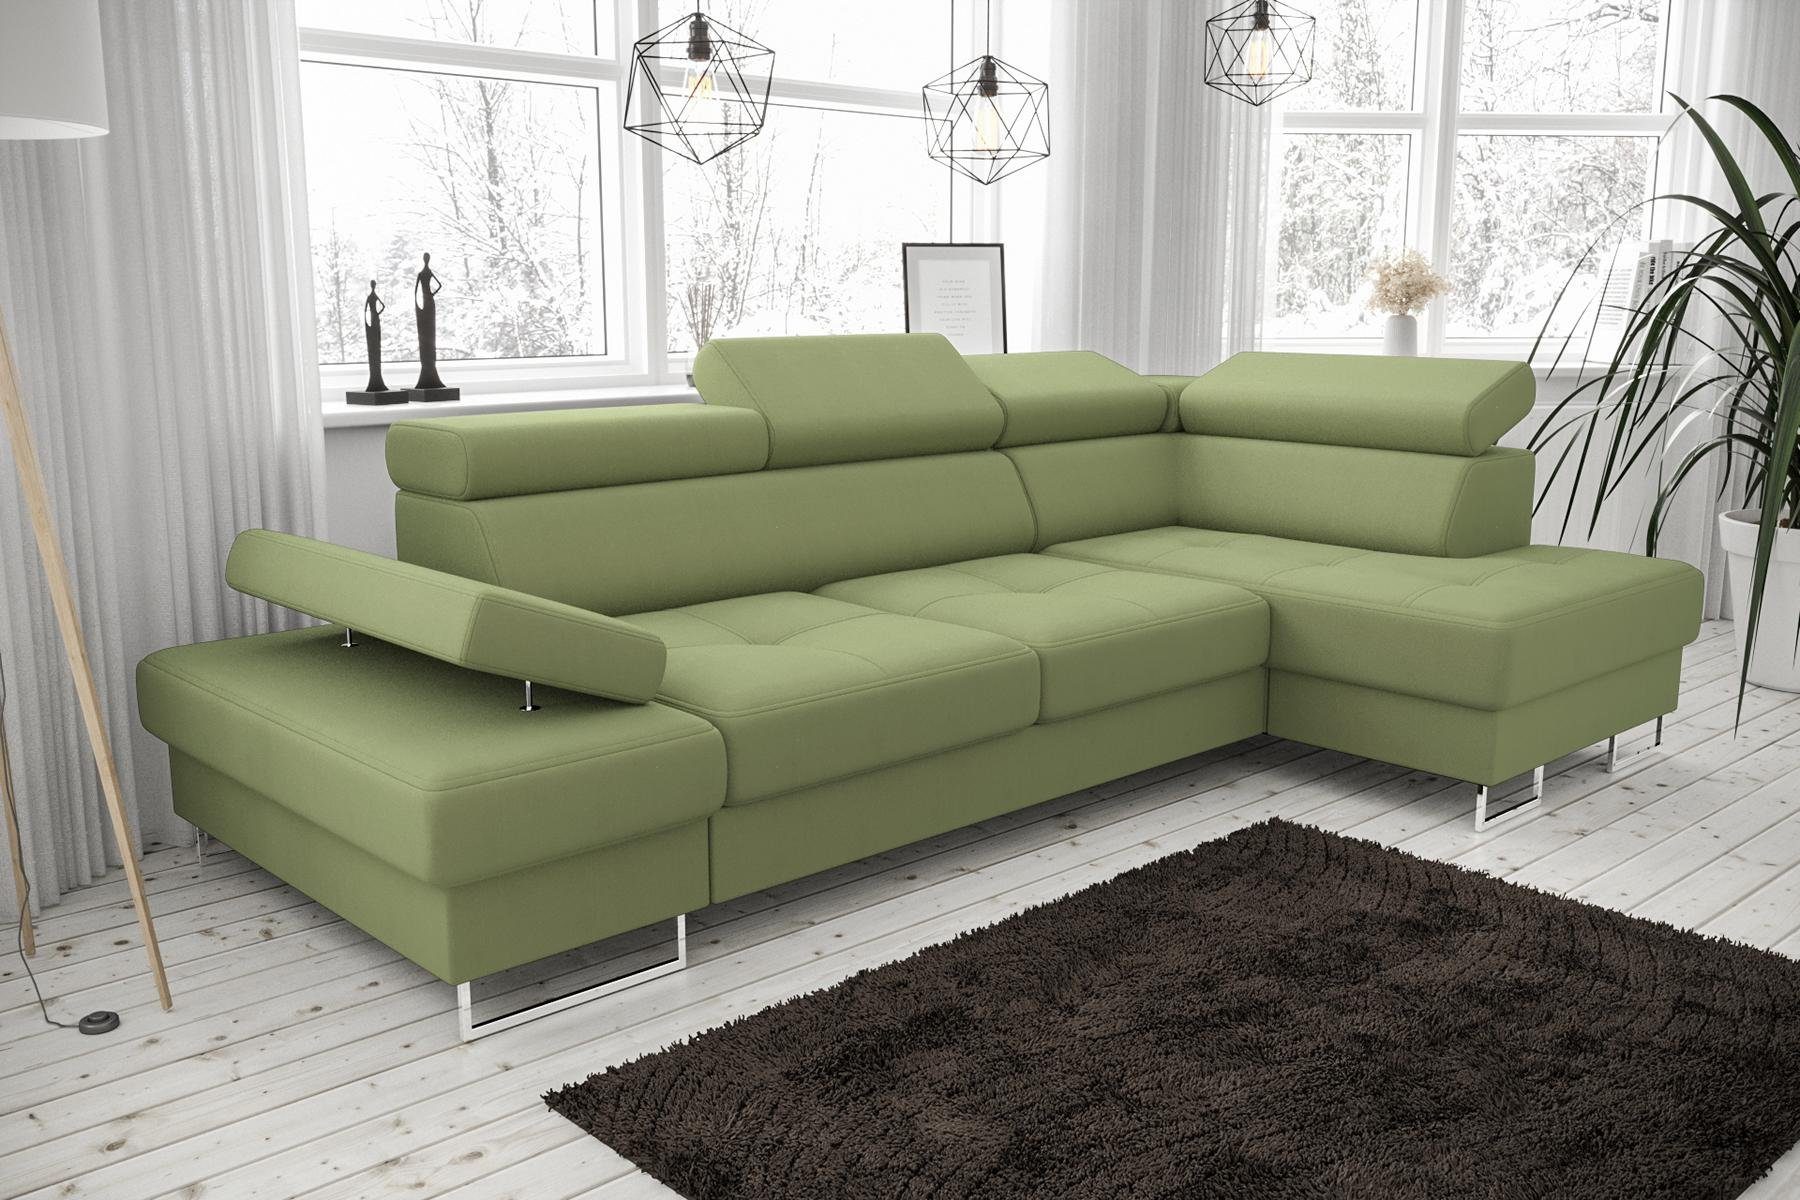 JVmoebel Ecksofa Europe in Sofa Made Design Grün L Wohnlandschaft Form Couch Ecksofa, Polster Sofas